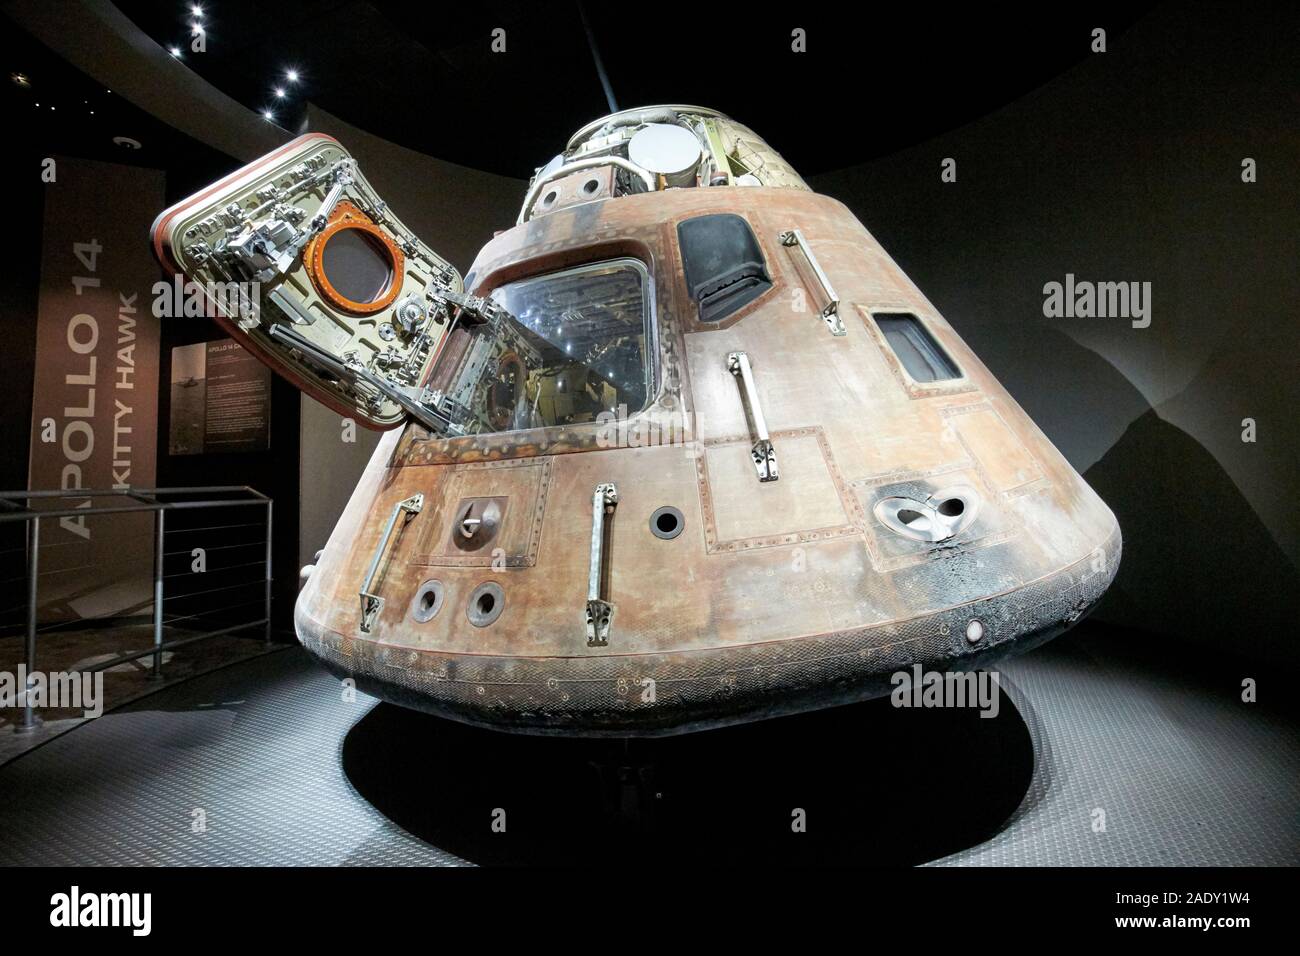 apollo 14 crew capsule command module on display at kennedy space center florida usa Stock Photo